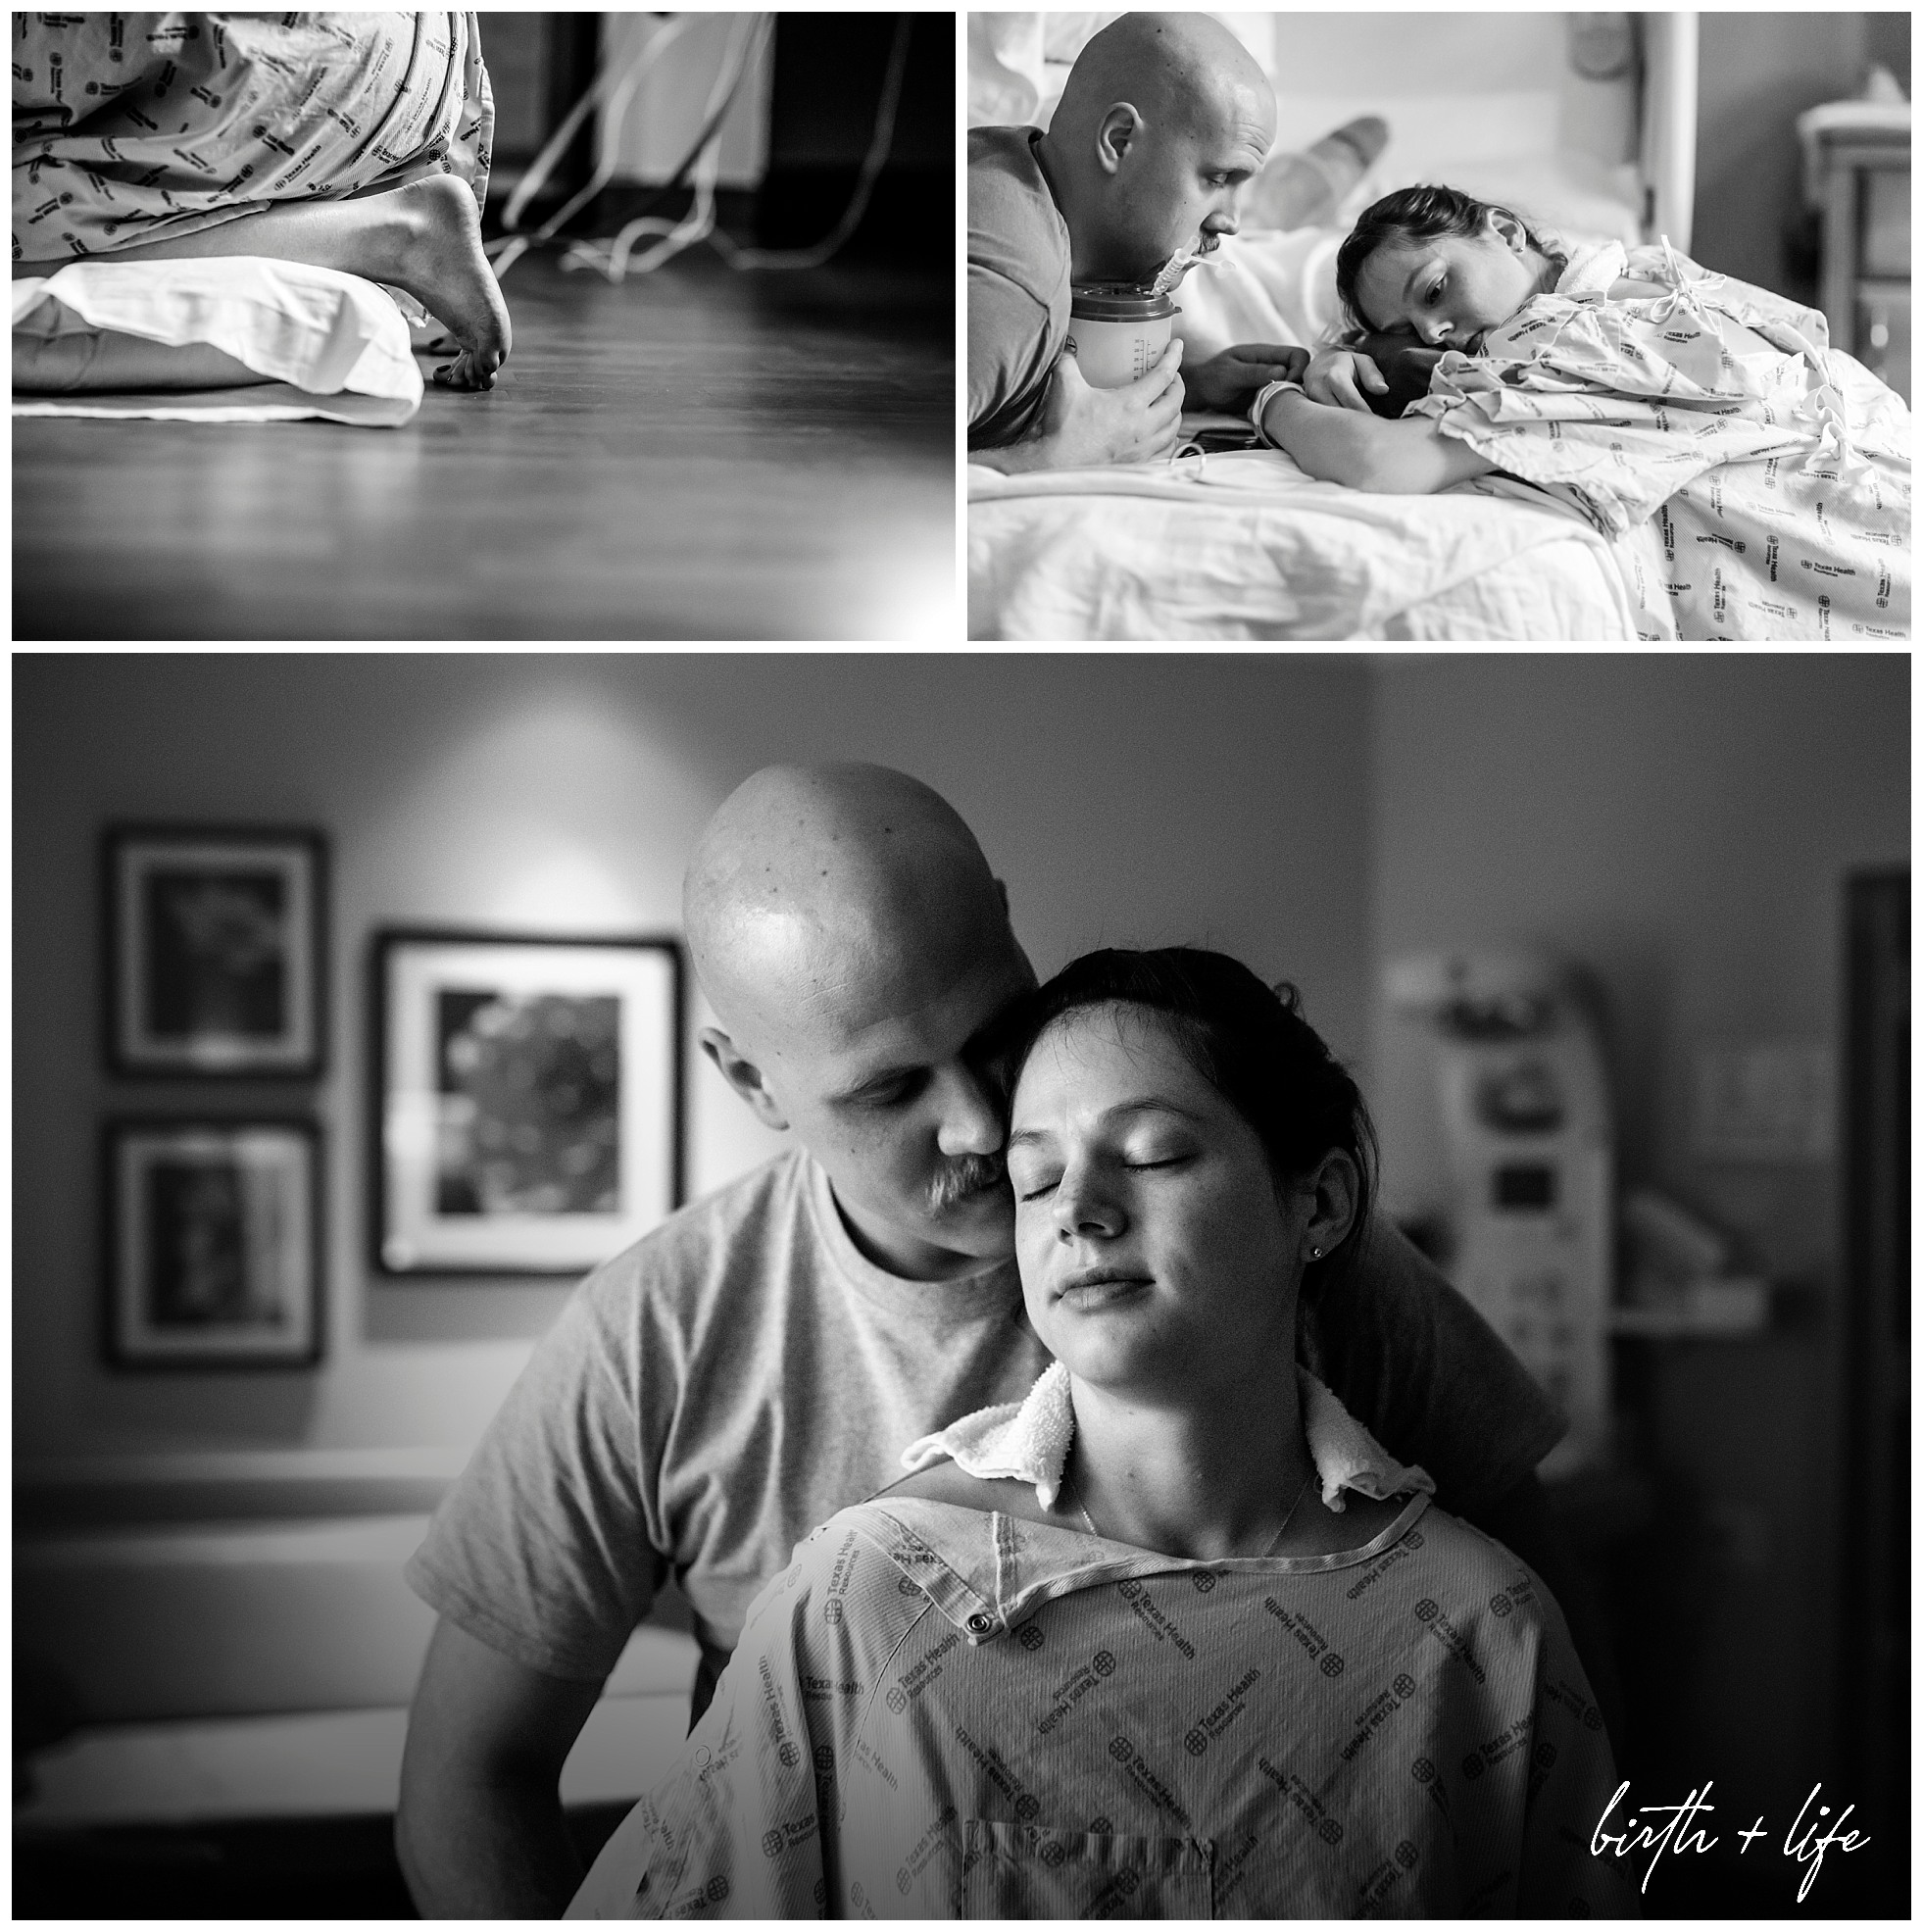 dfw-birth-and-life-photography-family-photojournalism-documentary-birth-storyacclaim-midwives-clark002.jpg